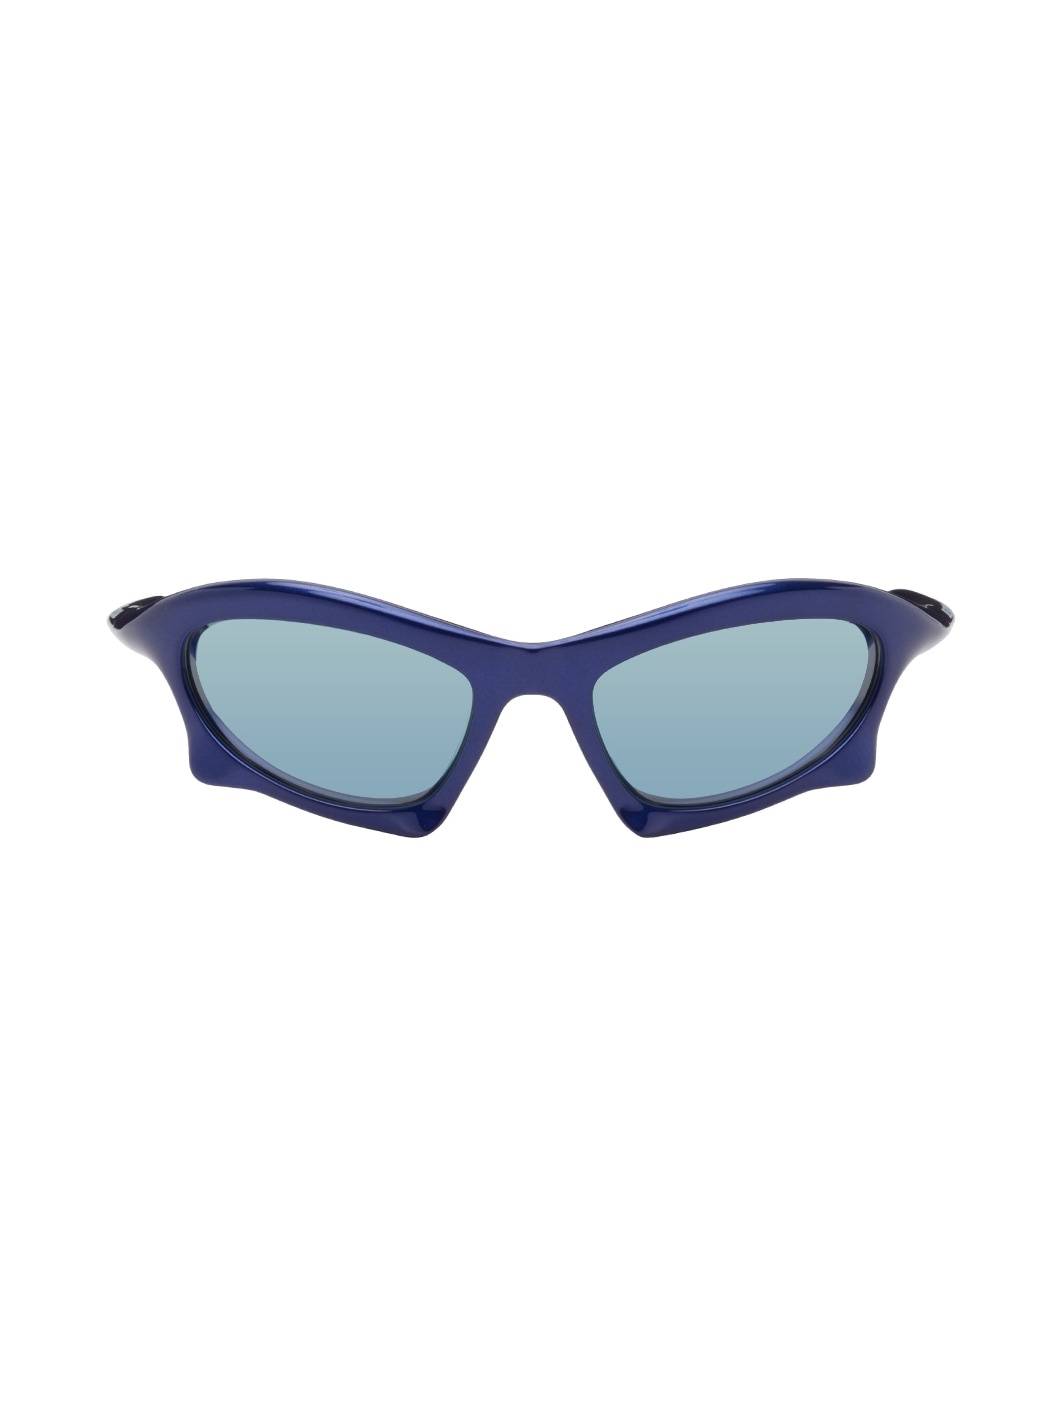 Blue Bat Rectangle Sunglasses - 1